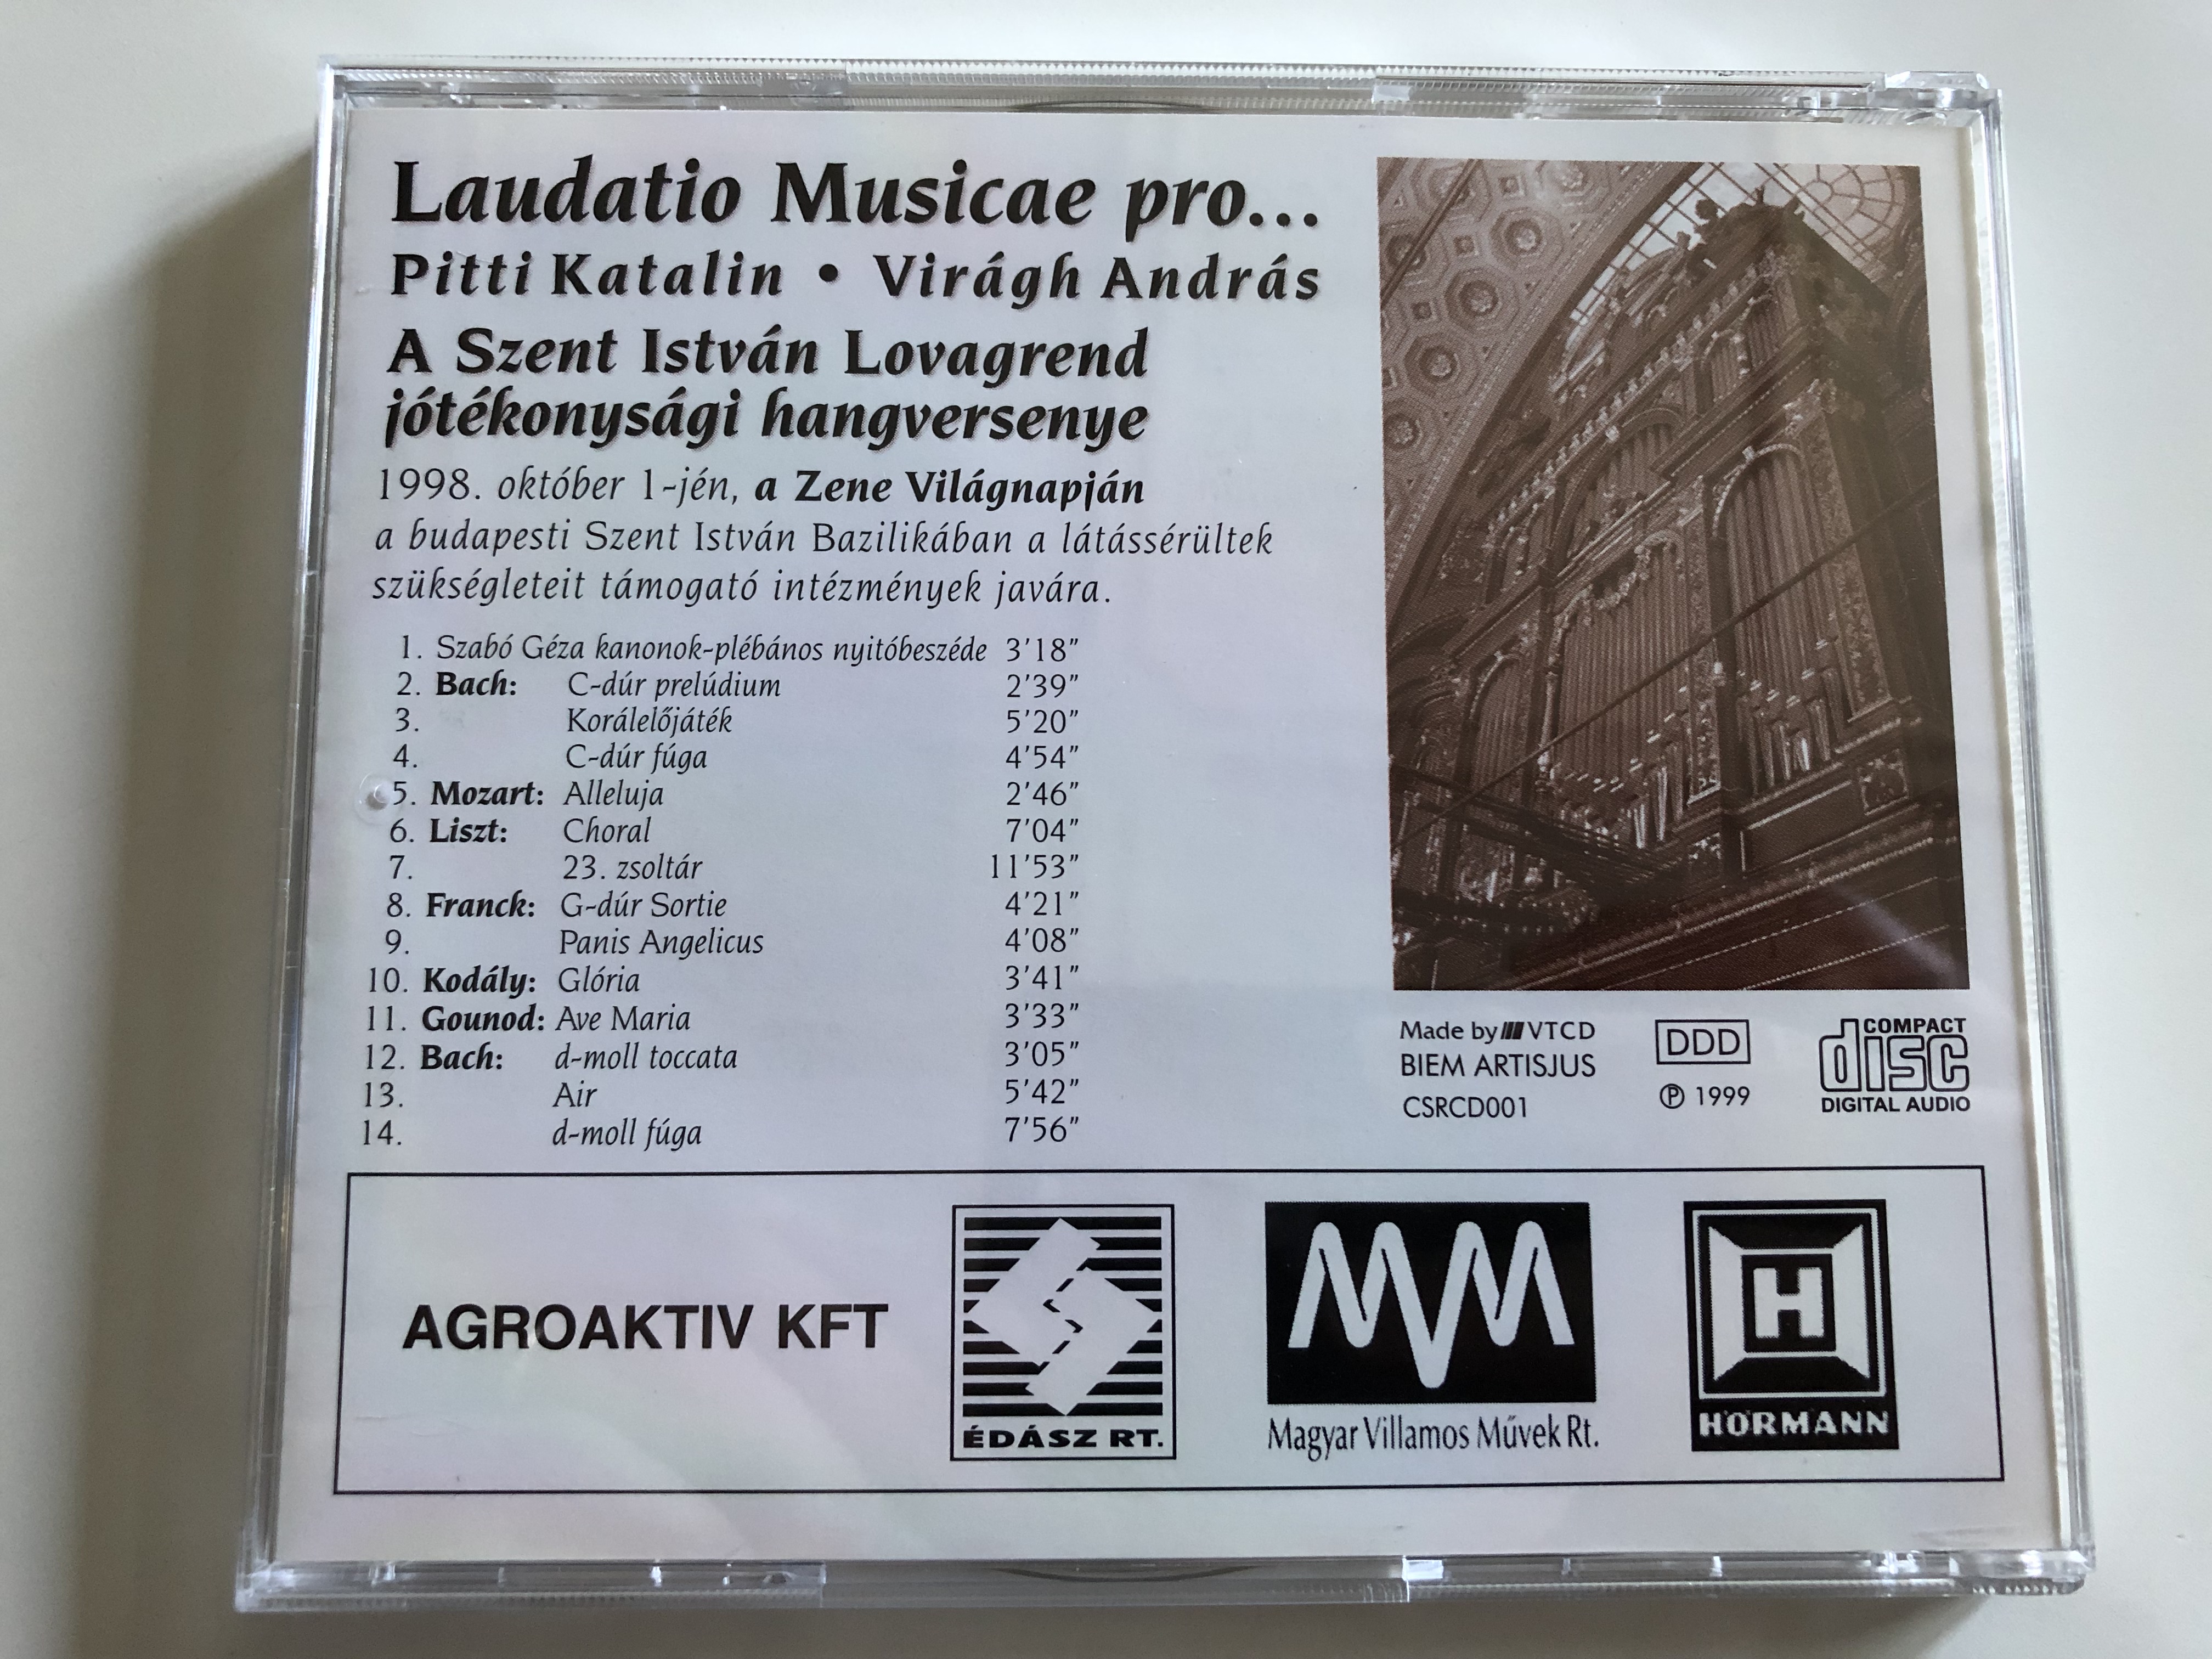 laudatio-musicae-pro...-pitti-katalin-viragh-andras-vtcd-audio-cd-1999-csrcd001-10-.jpg